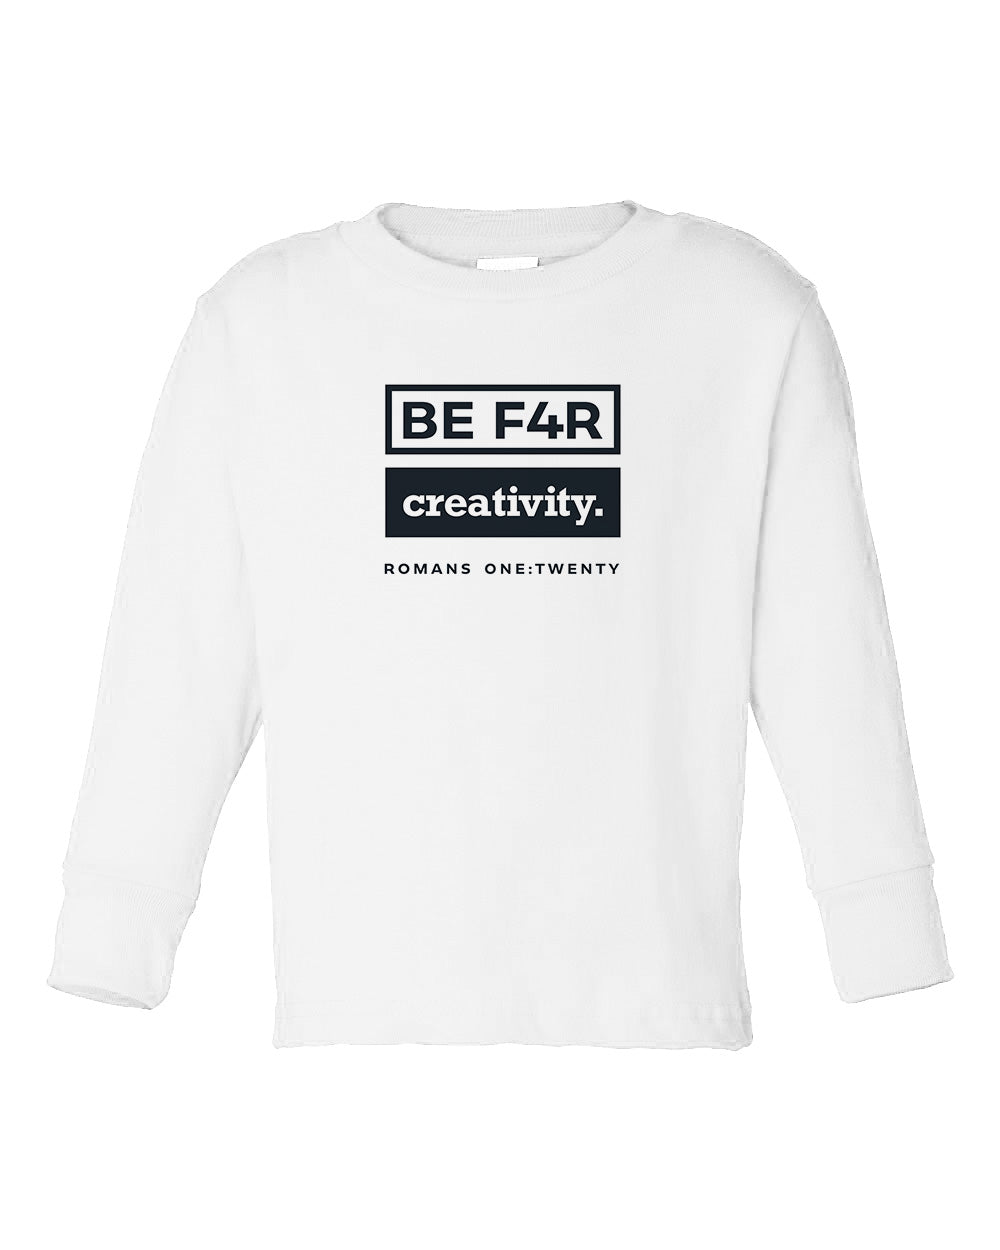 BE F4R Creativity 3 Toddler Long Sleeve